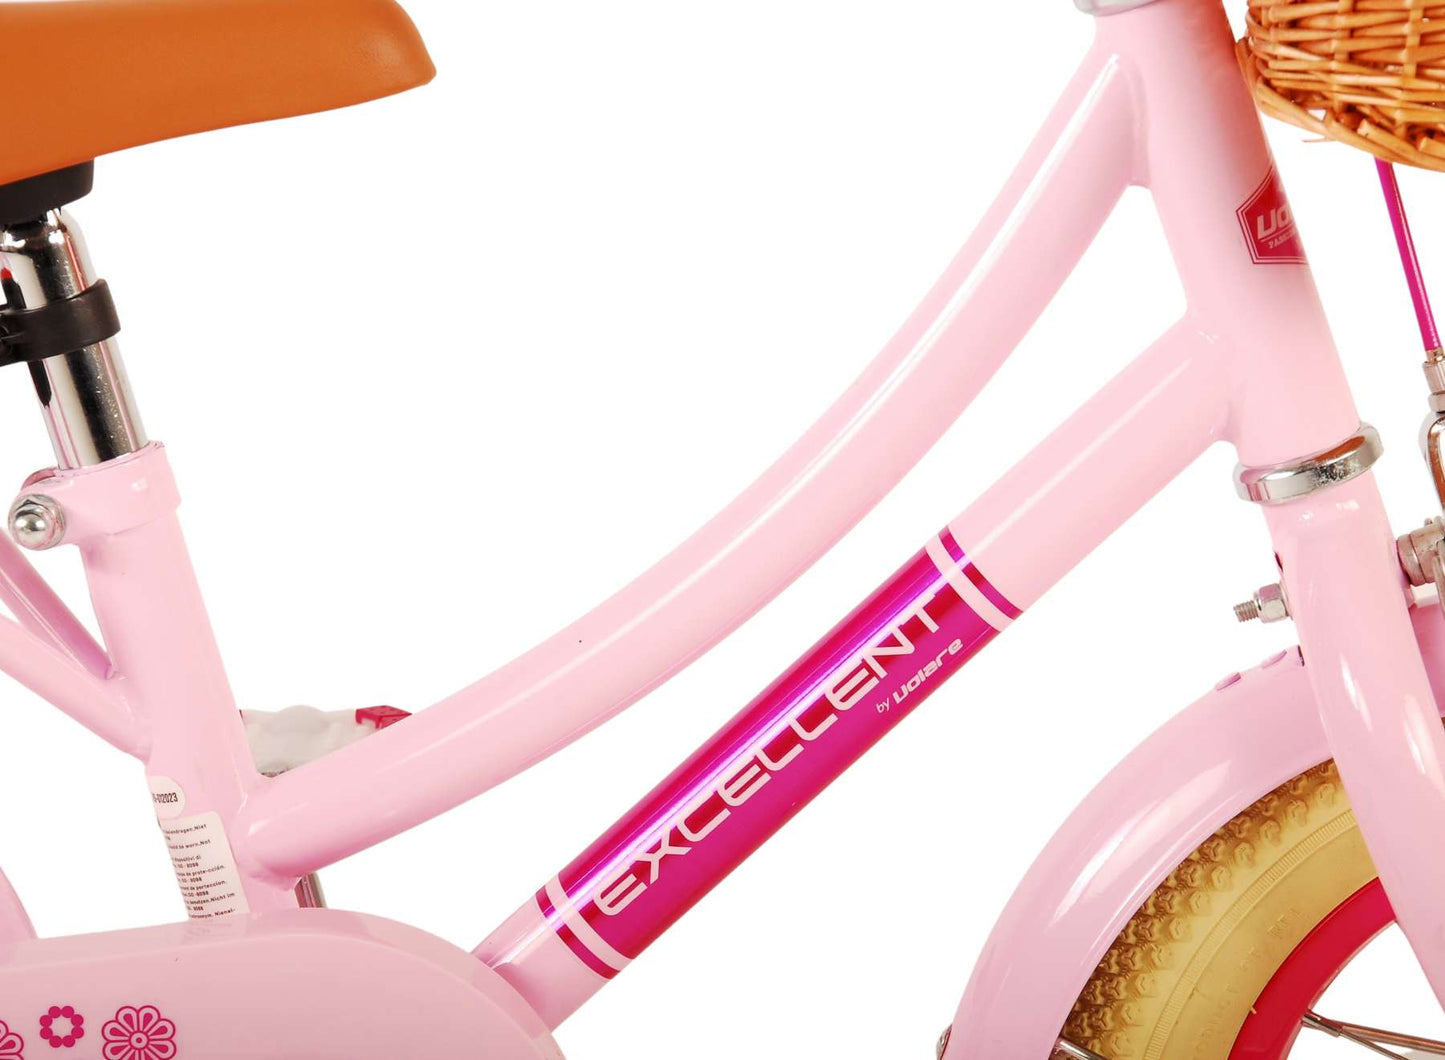 Volare Excelente bicicleta para niños - niñas - 12 pulgadas - rosa